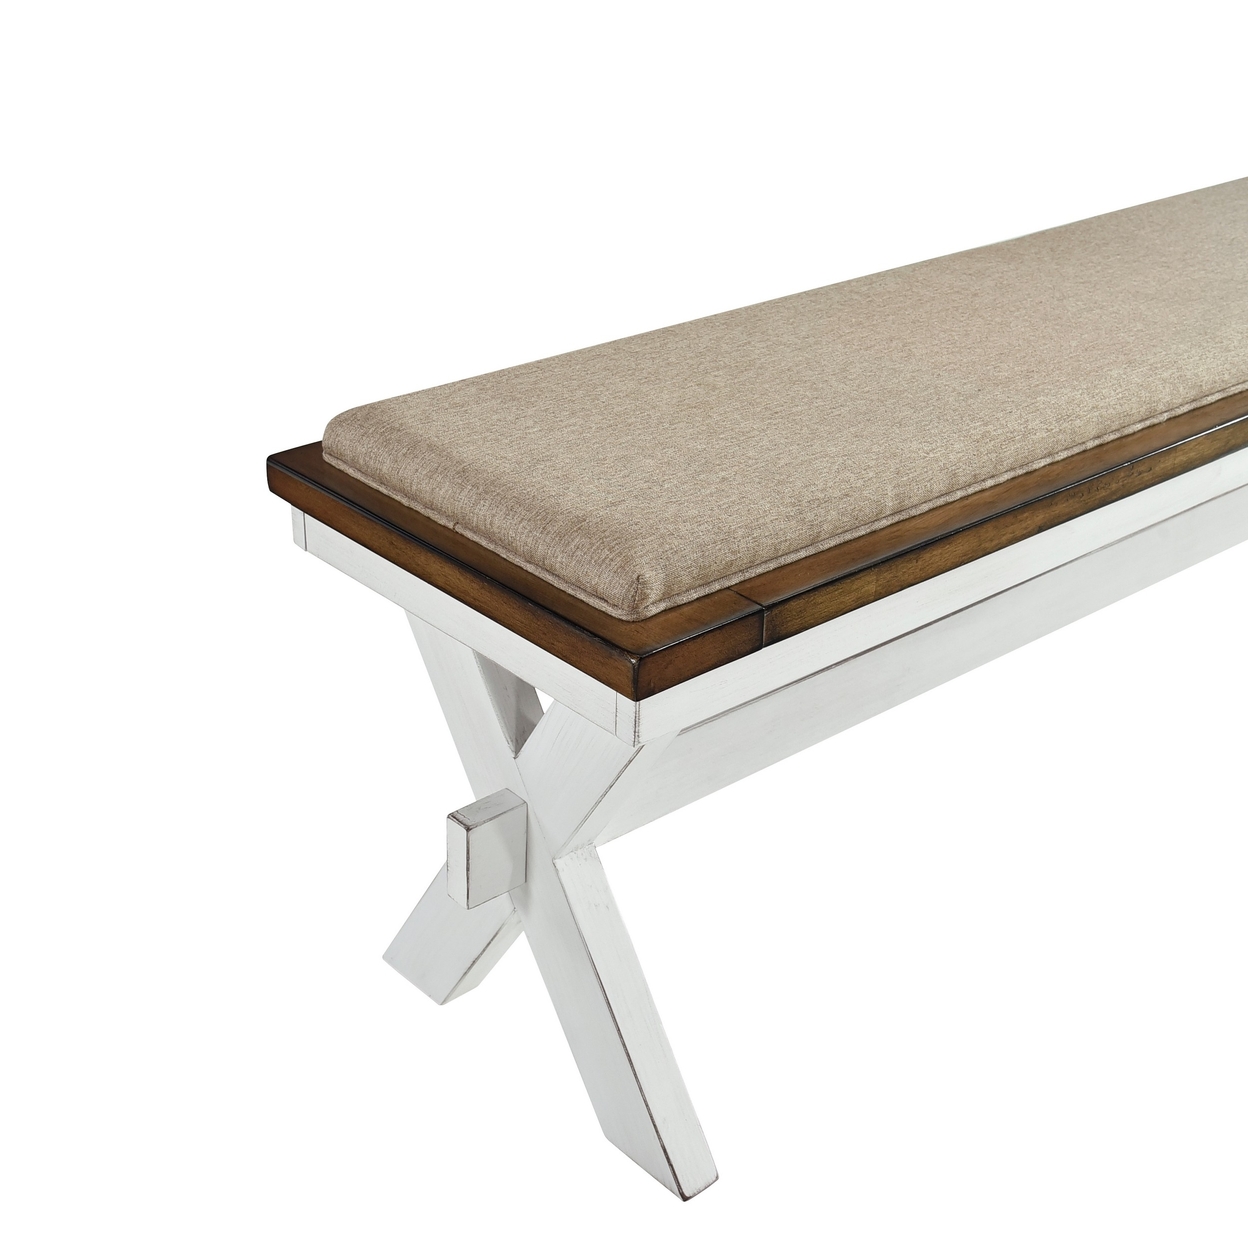 60 Inch Bench, Polyester Upholstery, Crossed Legs, Antique White Finish- Saltoro Sherpi